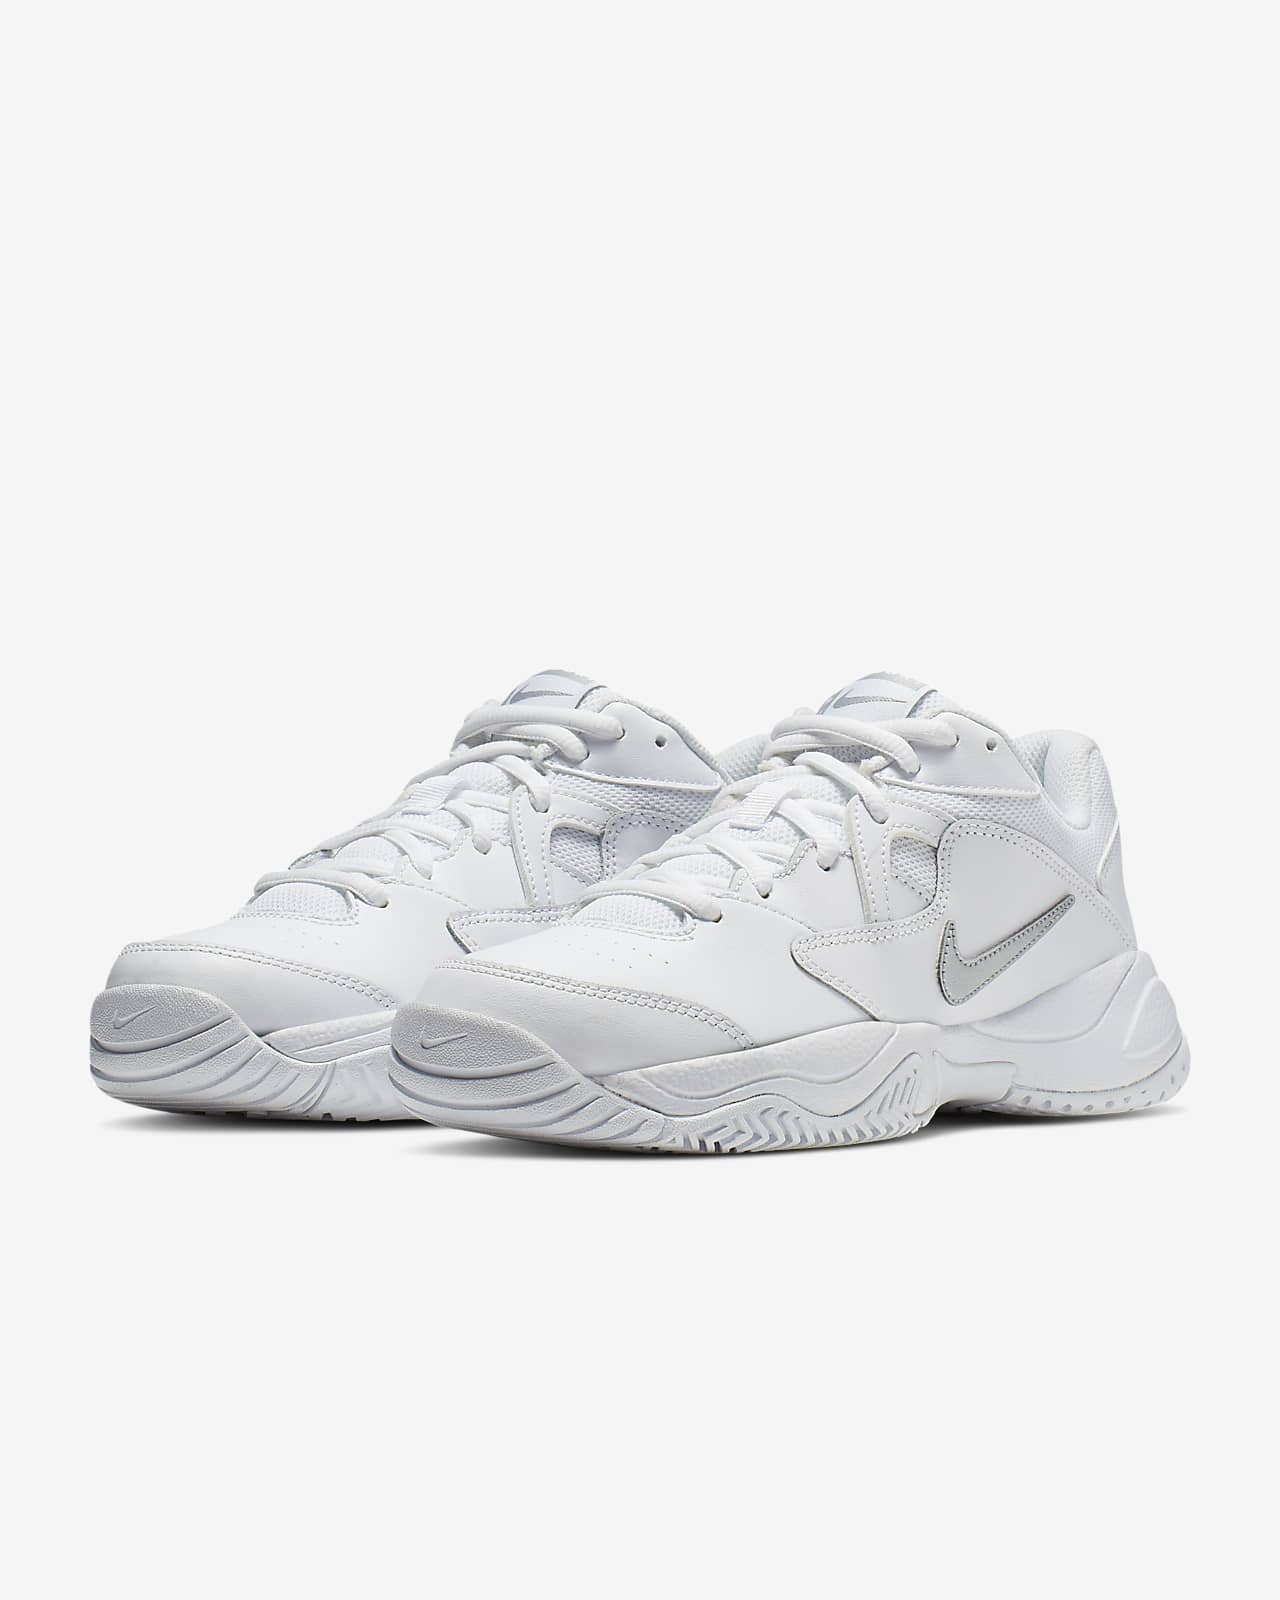 Hard Court Tennis Shoe. Nike SG